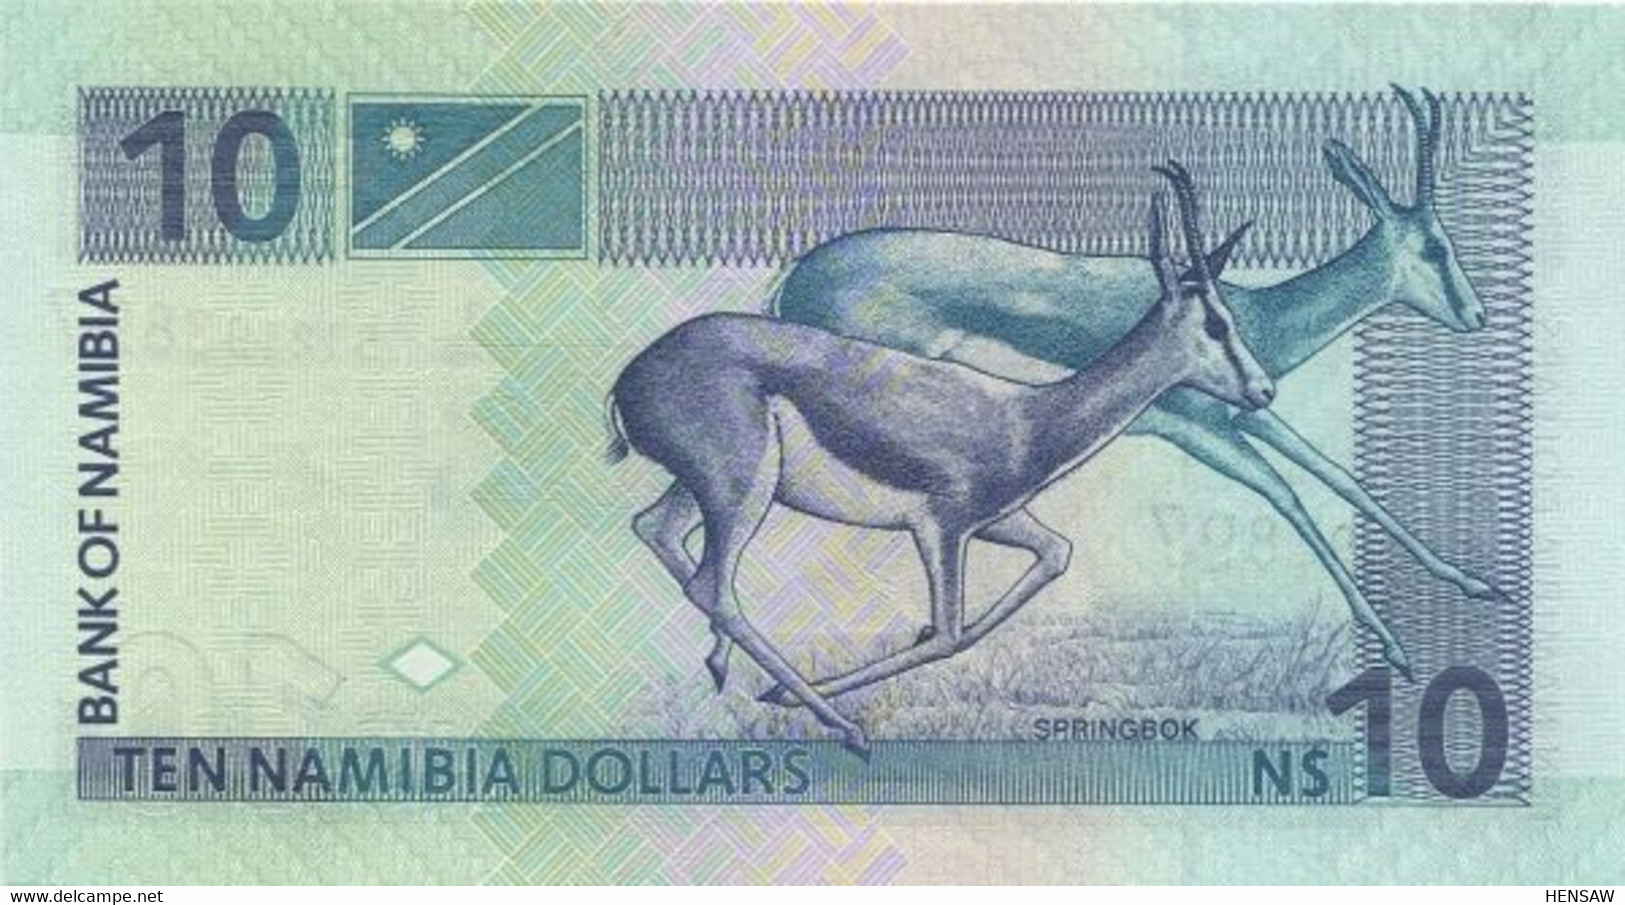 NAMIBIA 10 DOLLARS P 4Bb 2001 UNC SC NUEVO - Namibia